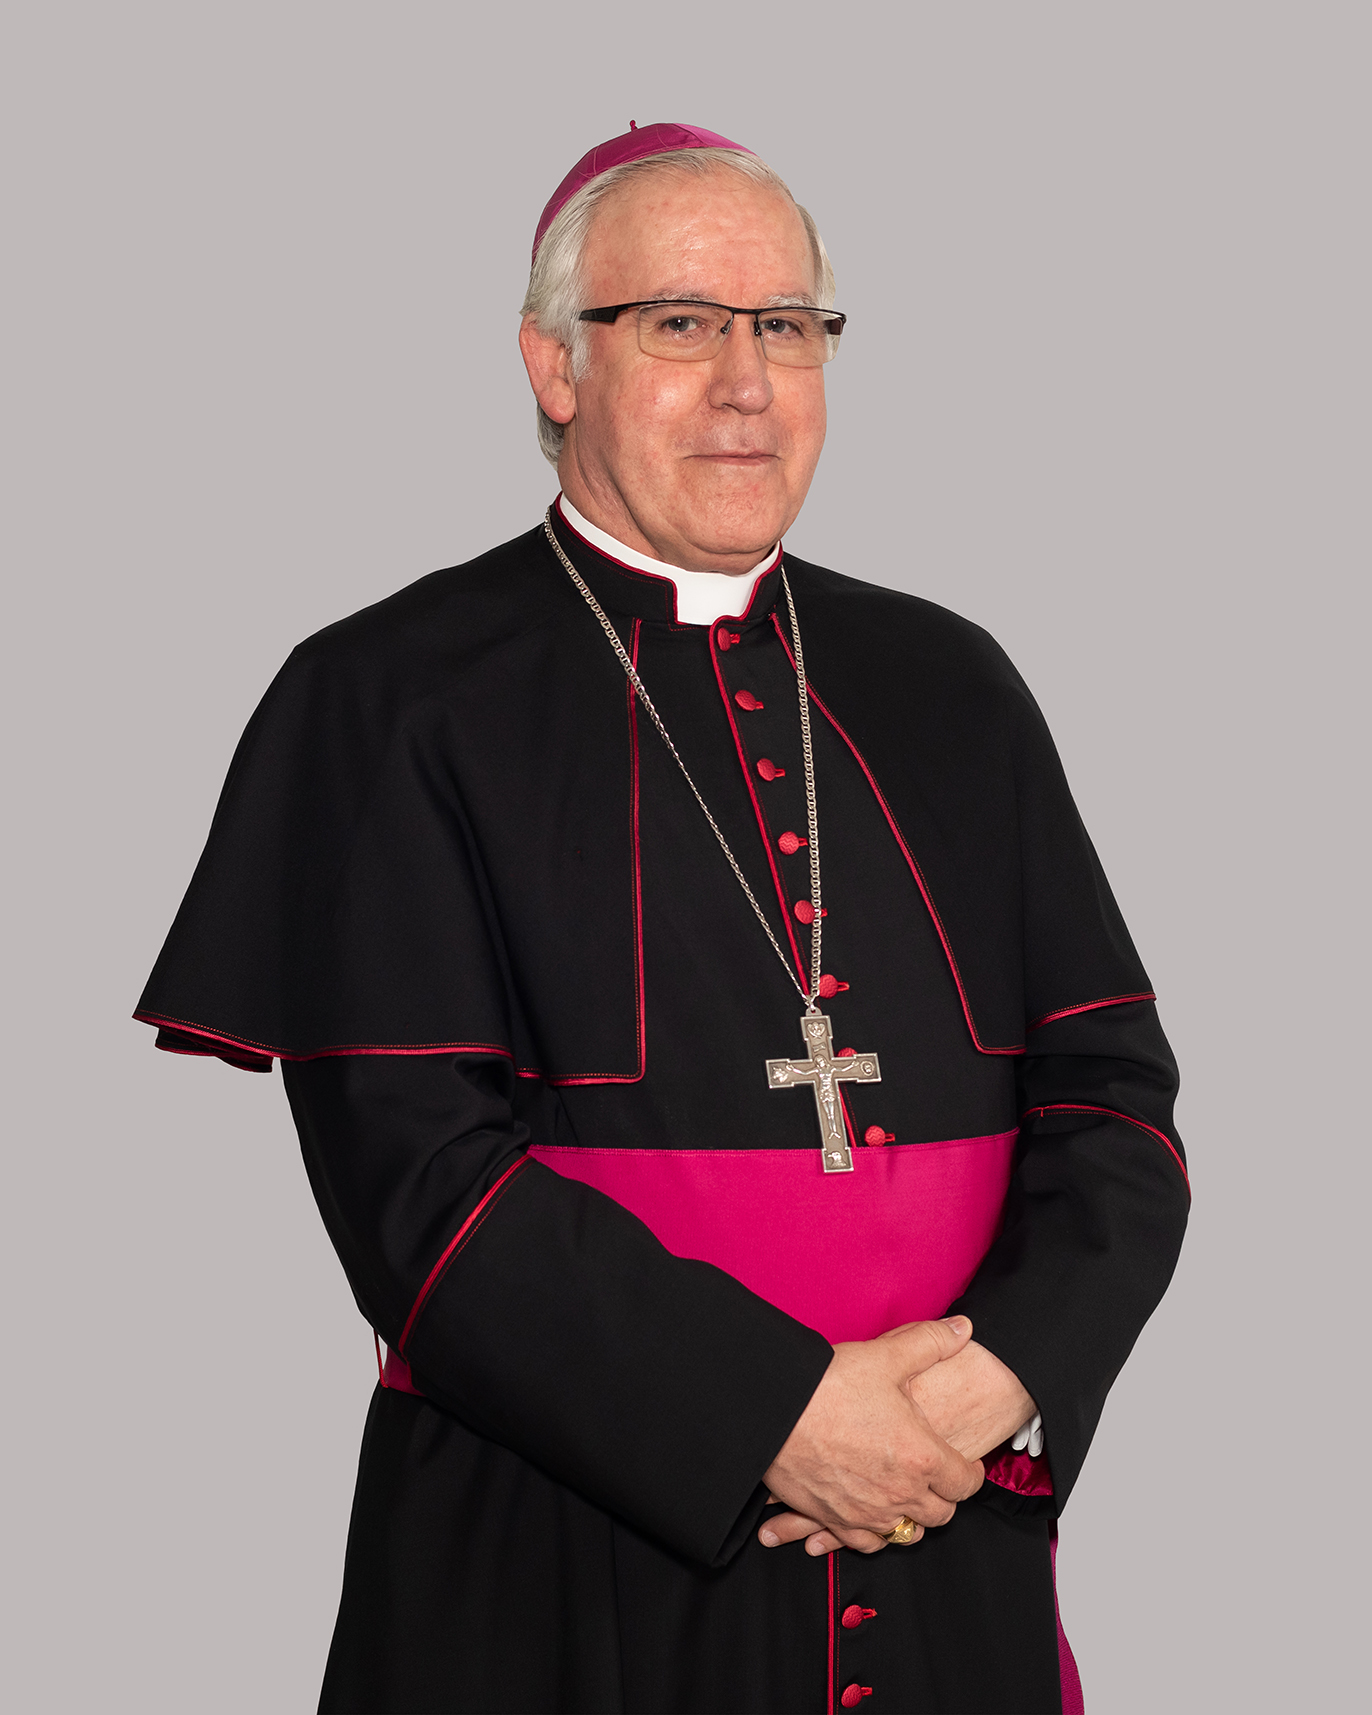  Don José Ángel Saiz Meneses, arzobispo metropolitano de Sevilla